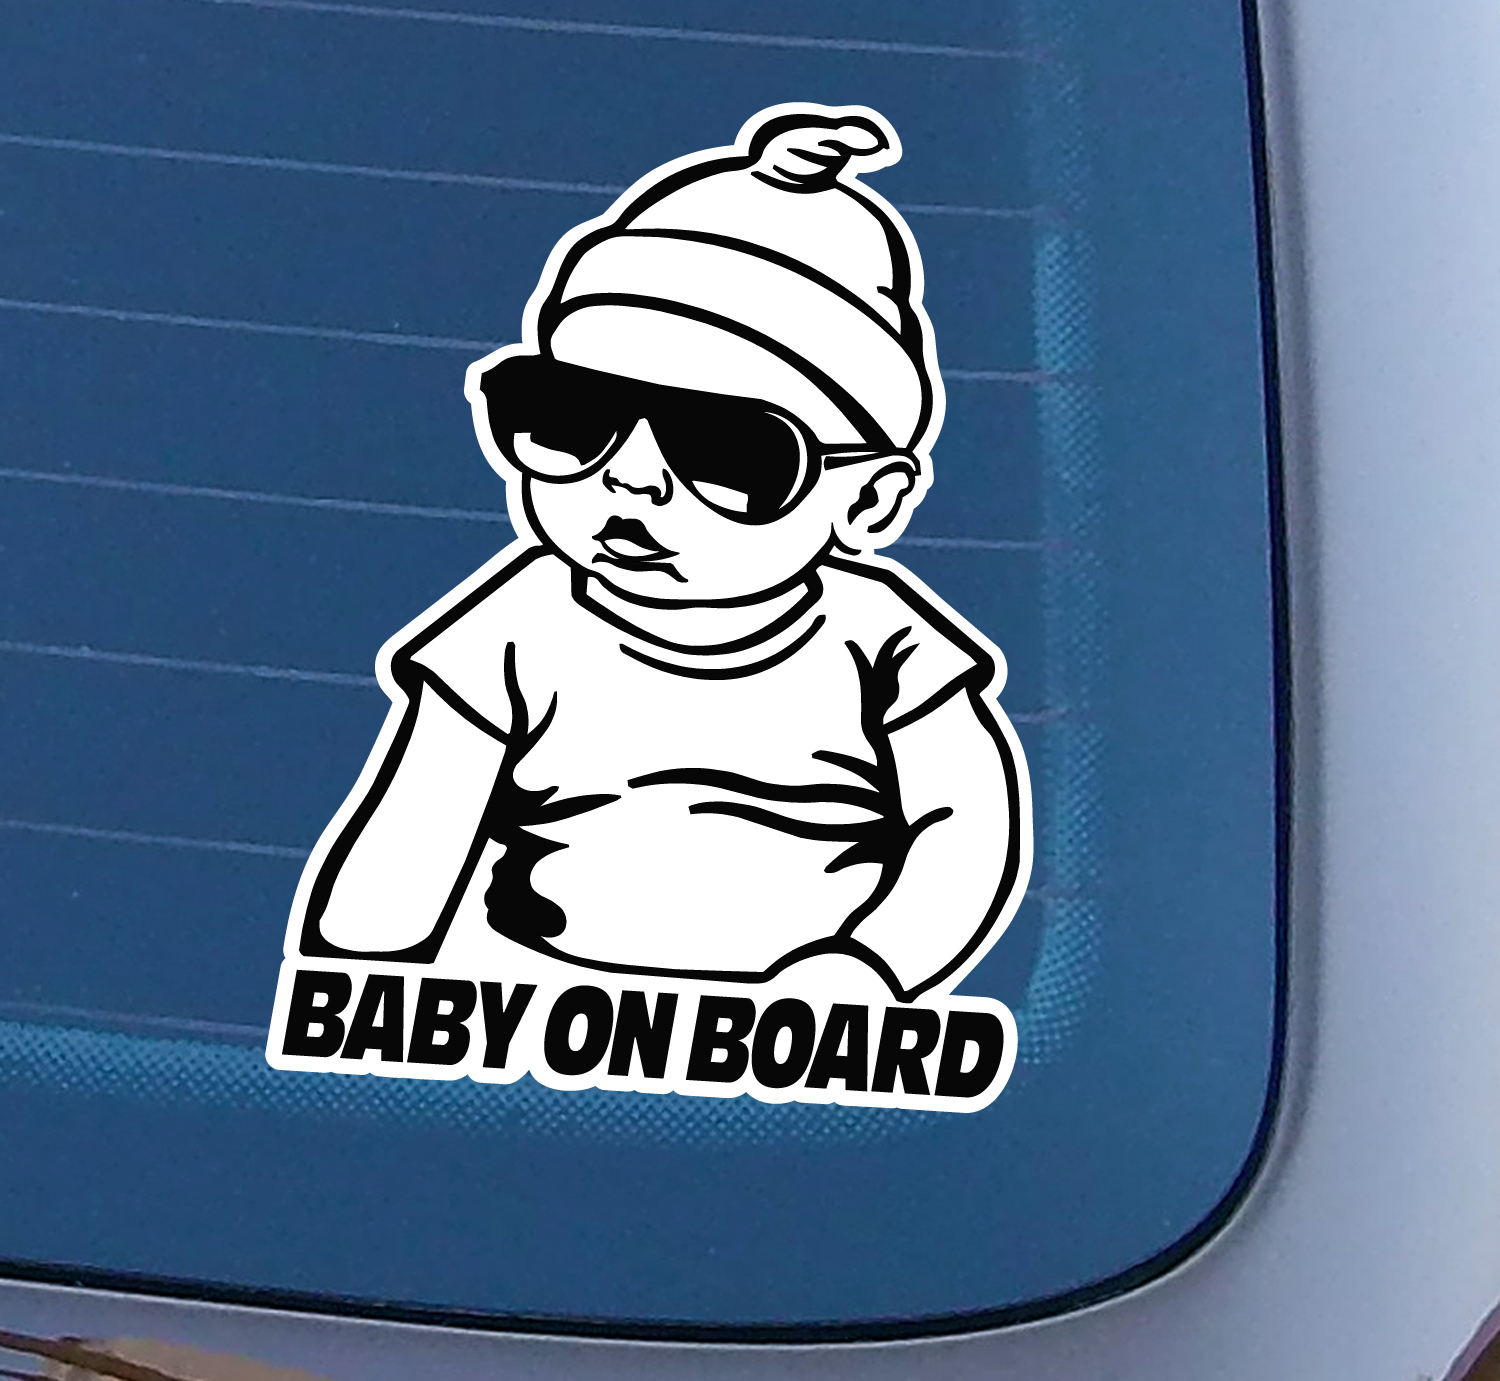 https://www.topdesignshop.de/images/product_images/original_images/babyaufkleber-lustiger-auto-aufkleber-baby-an-board-car-sticker.jpg